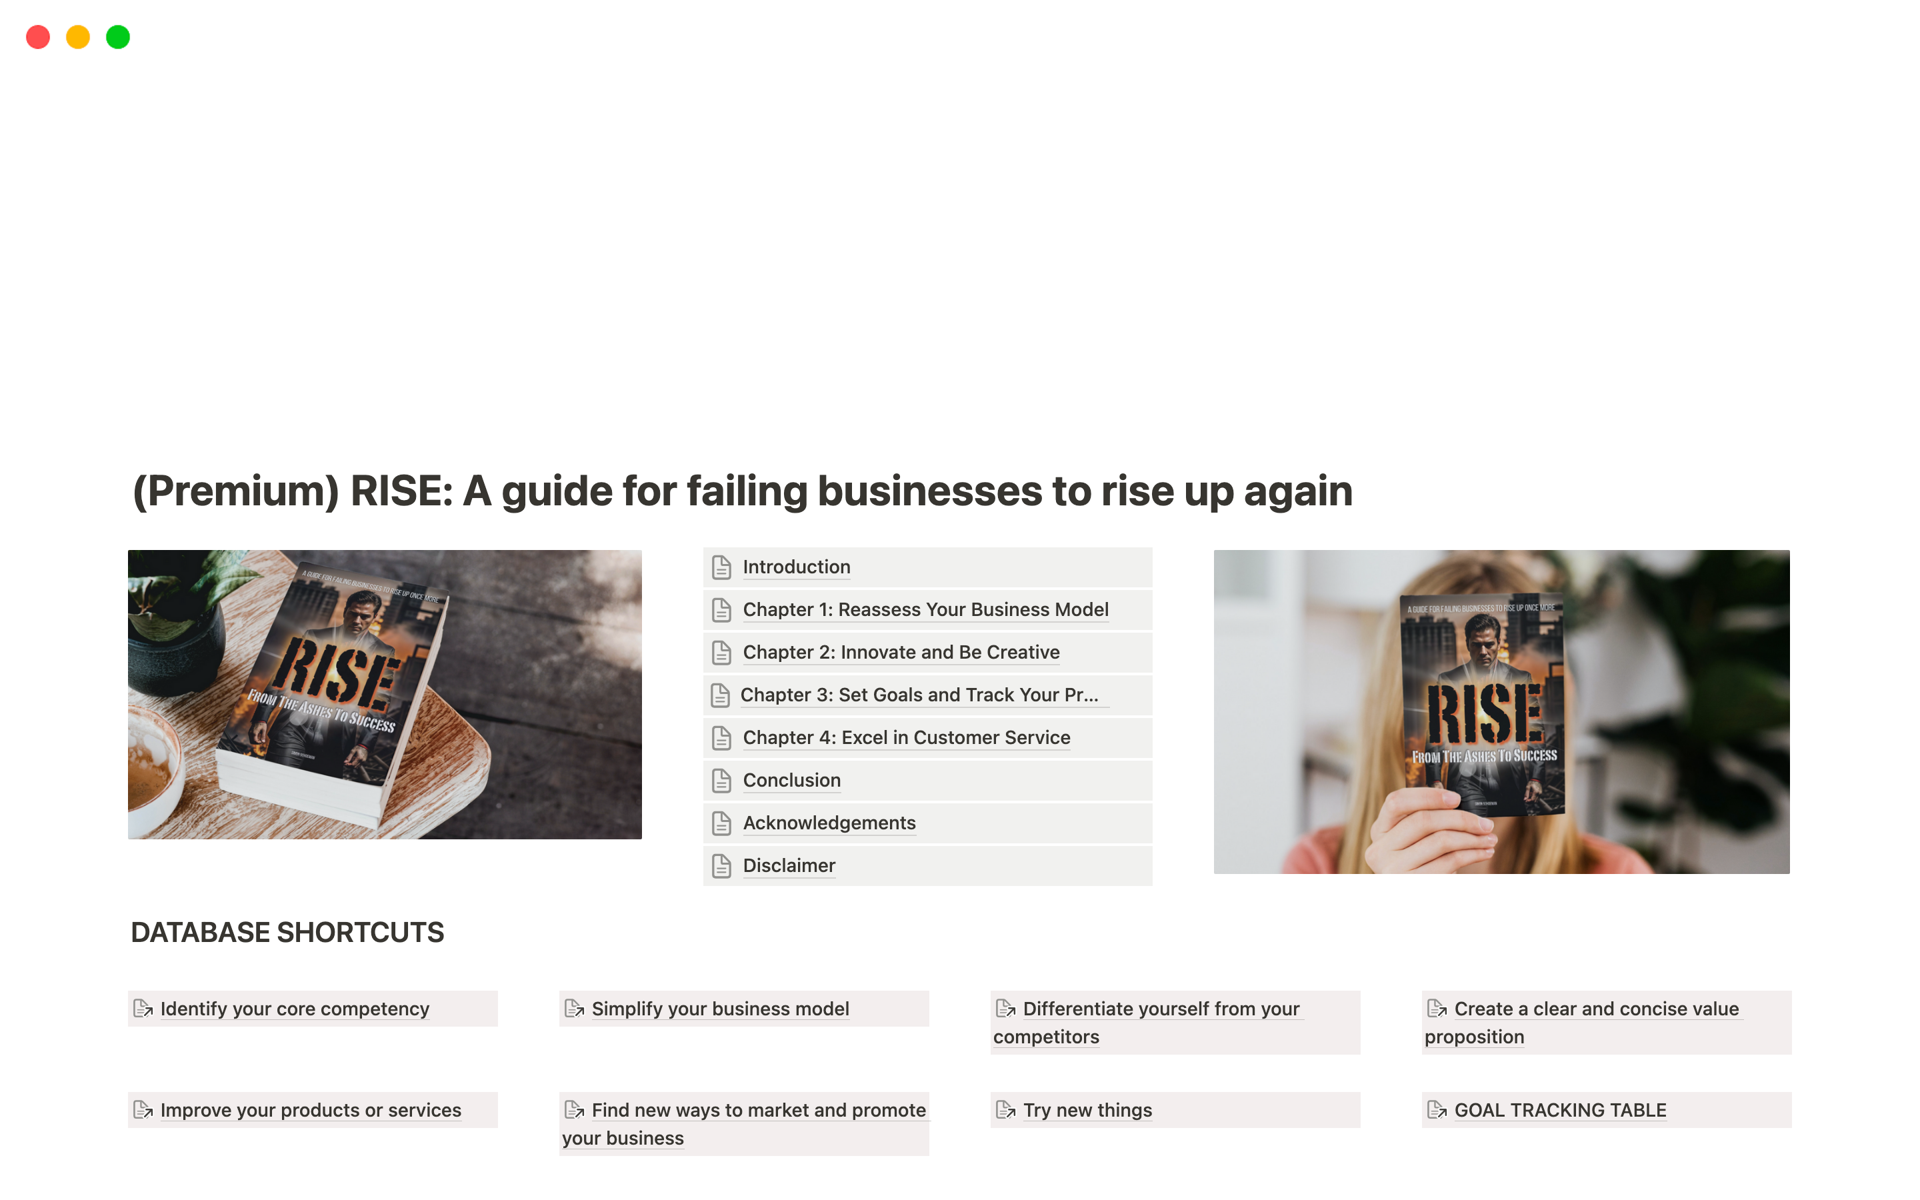 (Premium) RISE: A Guide For Failing Businesses님의 템플릿 미리보기